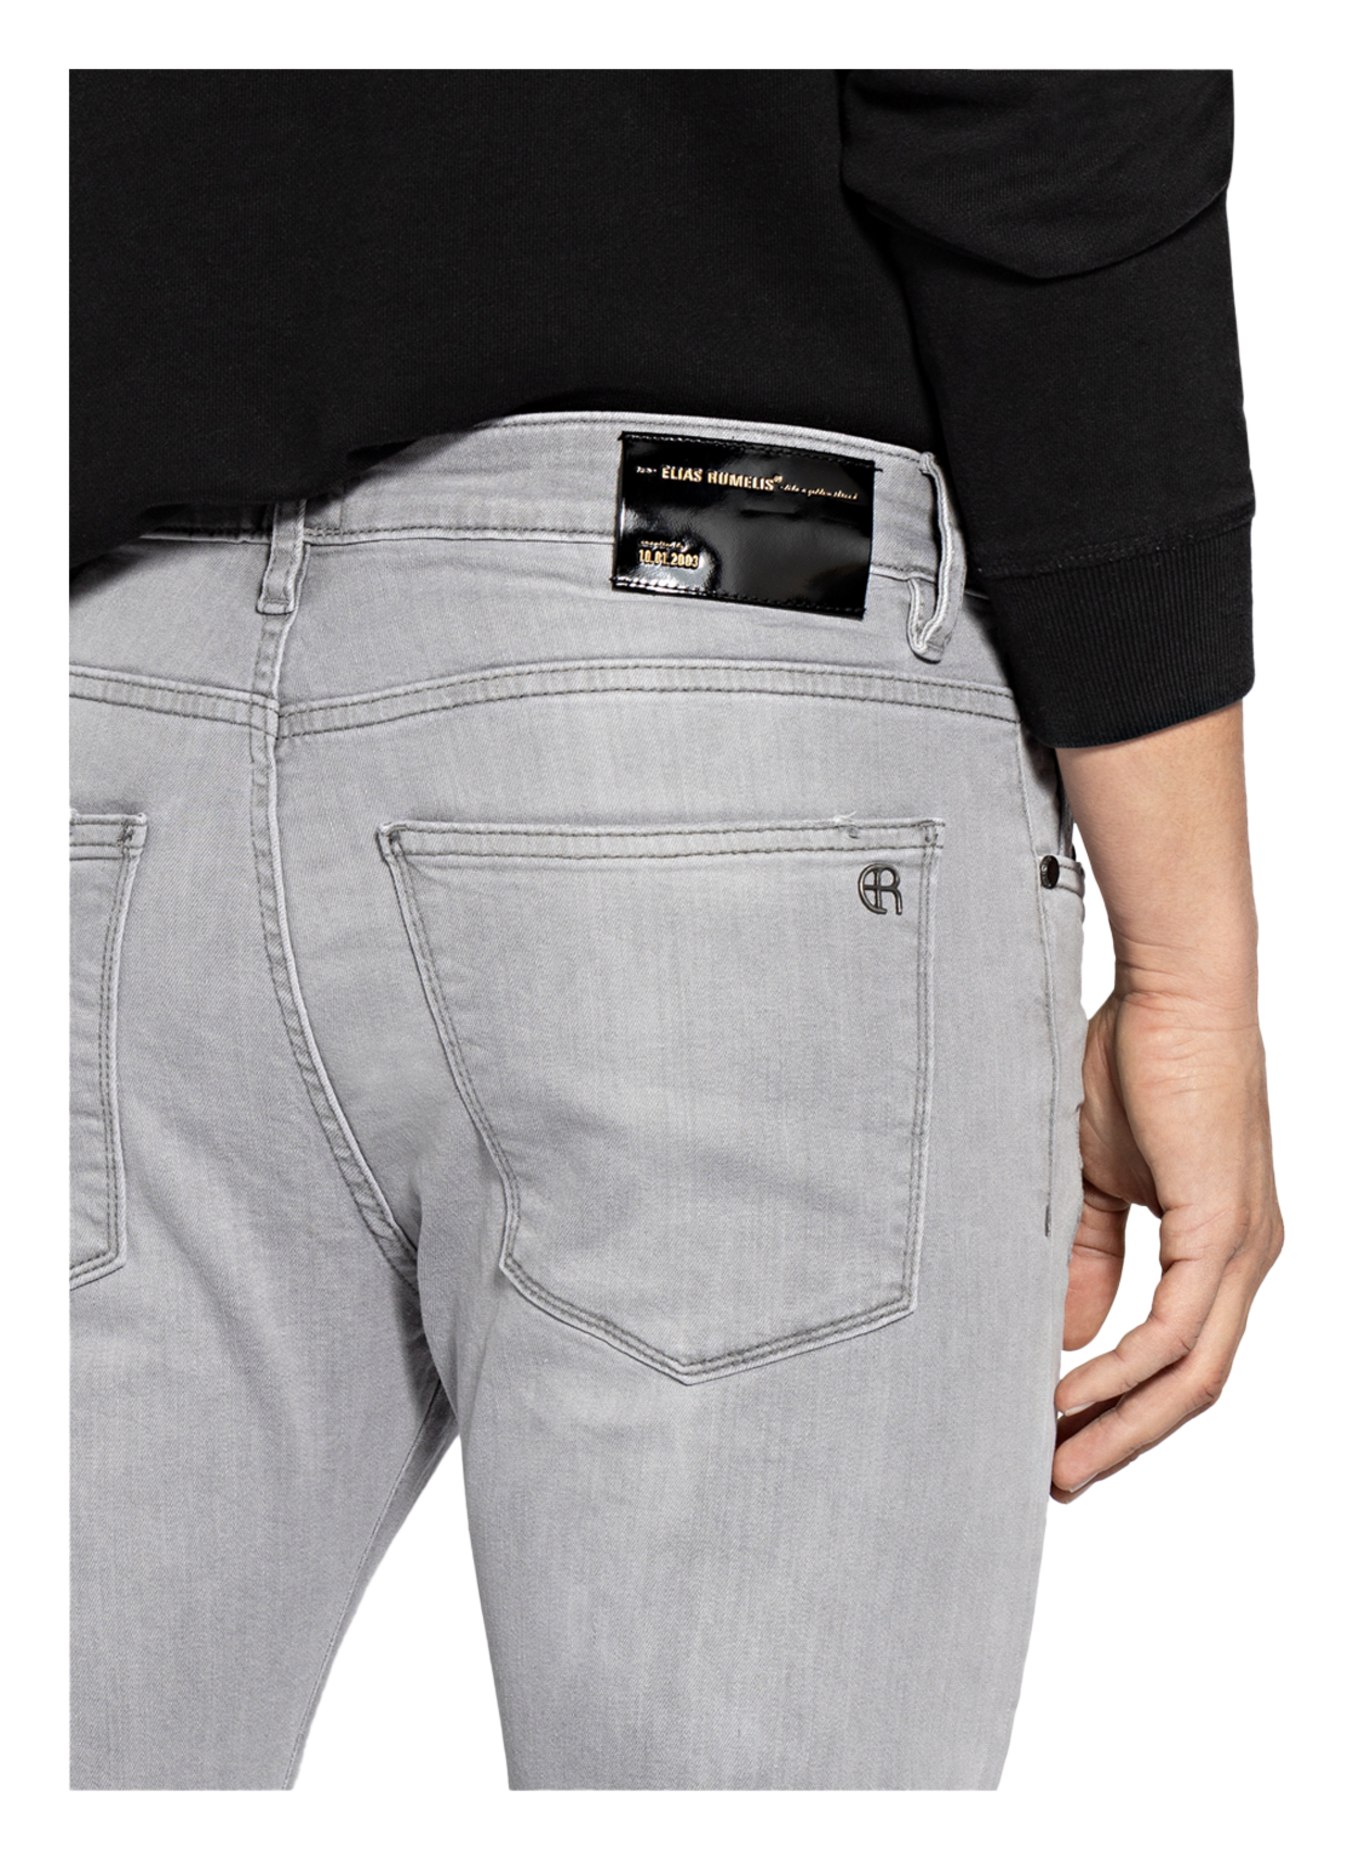 ELIAS RUMELIS Destroyed jeans ERNOEL comfort fit, Color: 559 flint grey (Image 5)